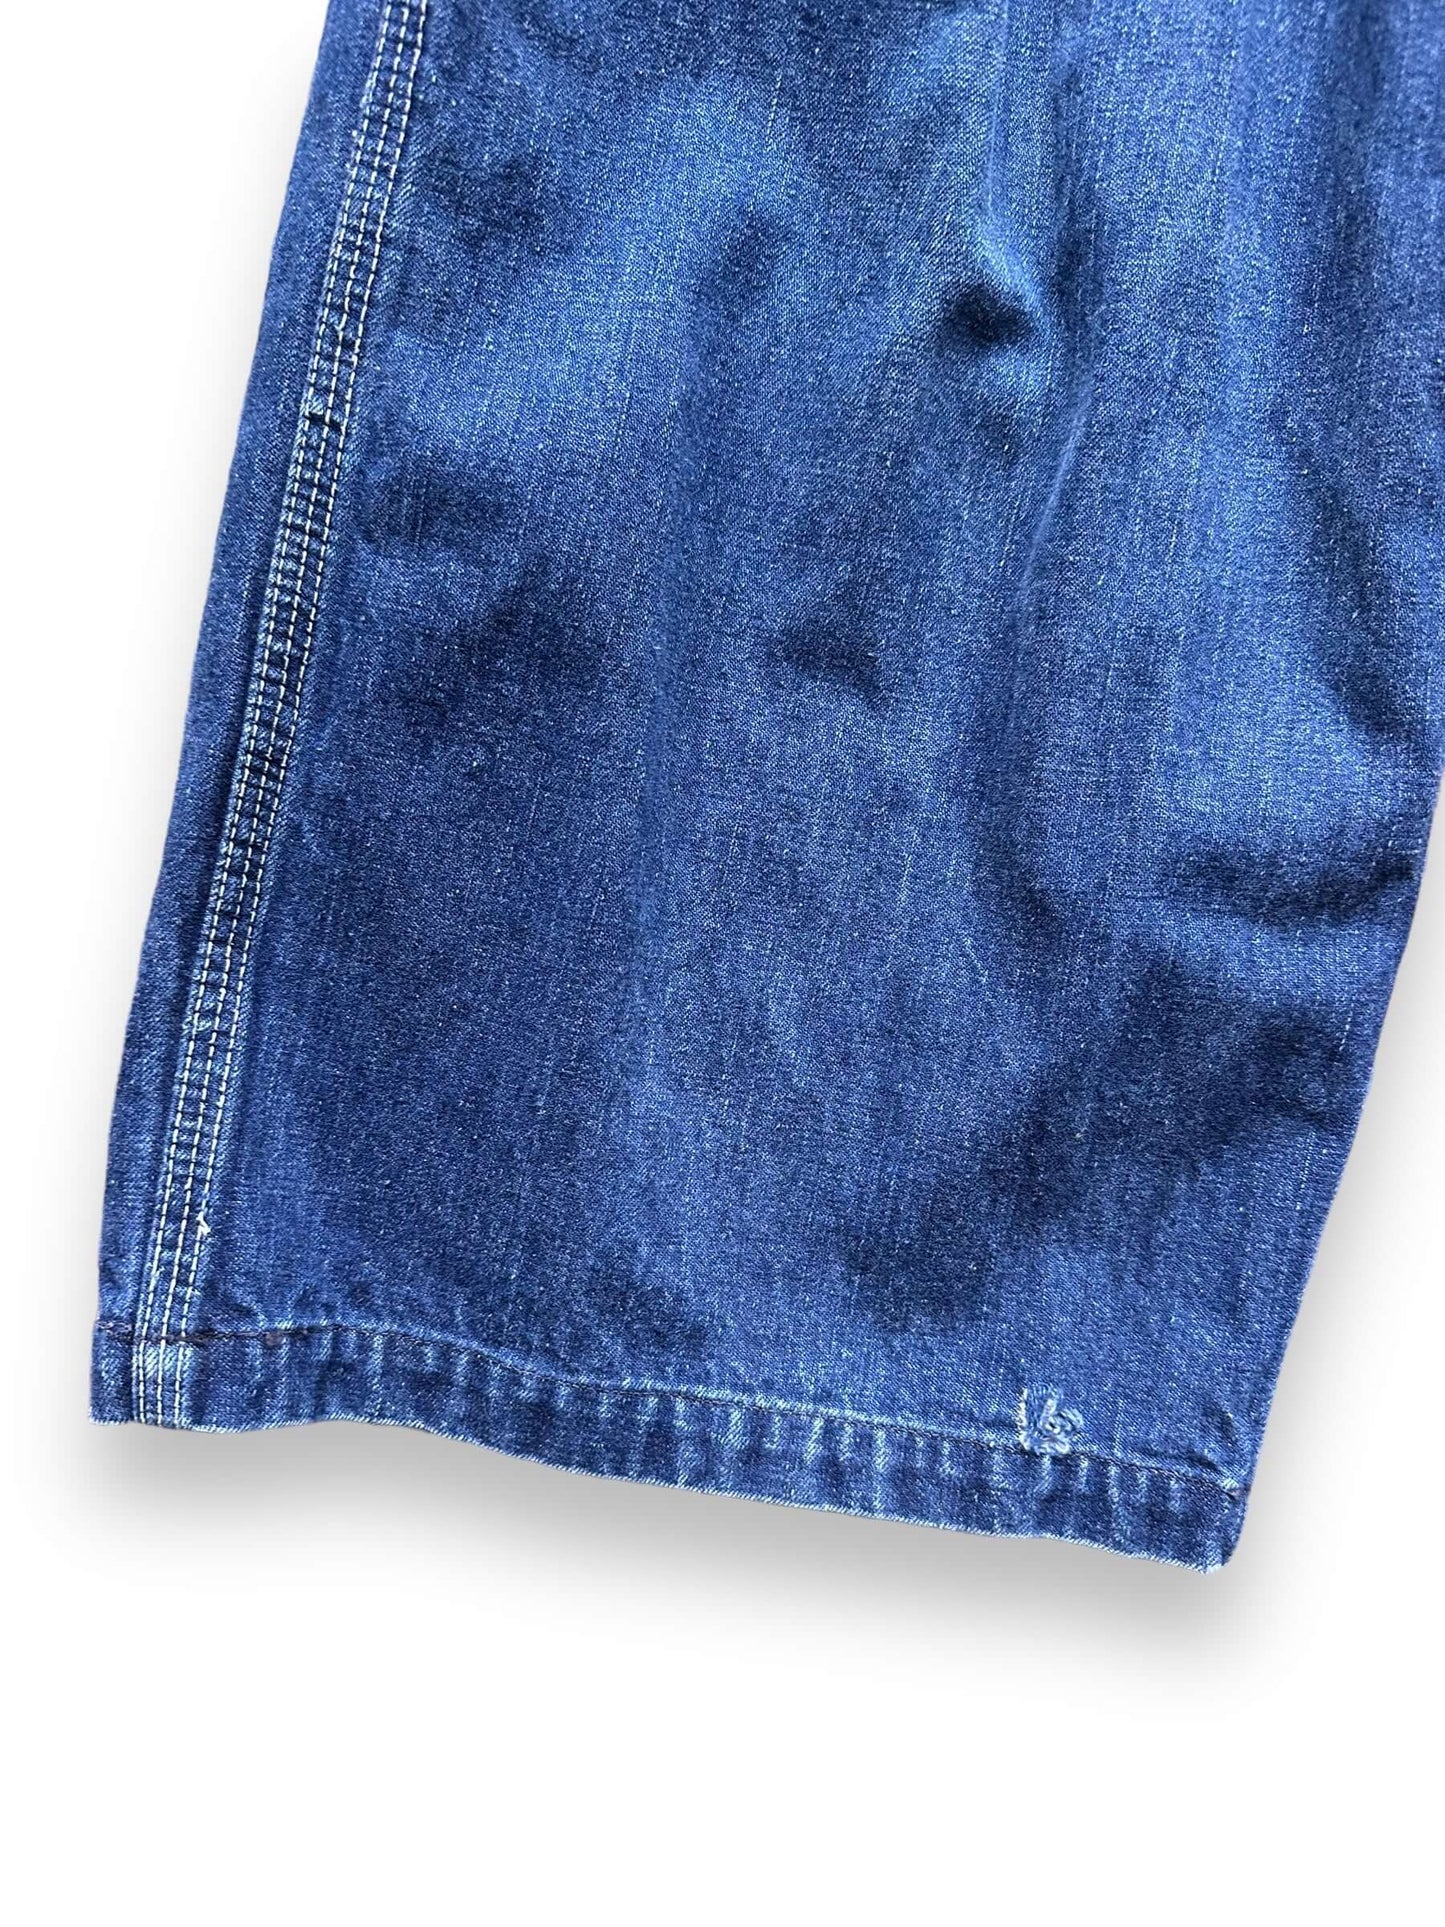 Small Abrasion on 70's Era Lee Jelt Denim Overalls | Vintage Denim Workwear Seattle | Seattle Vintage Denim